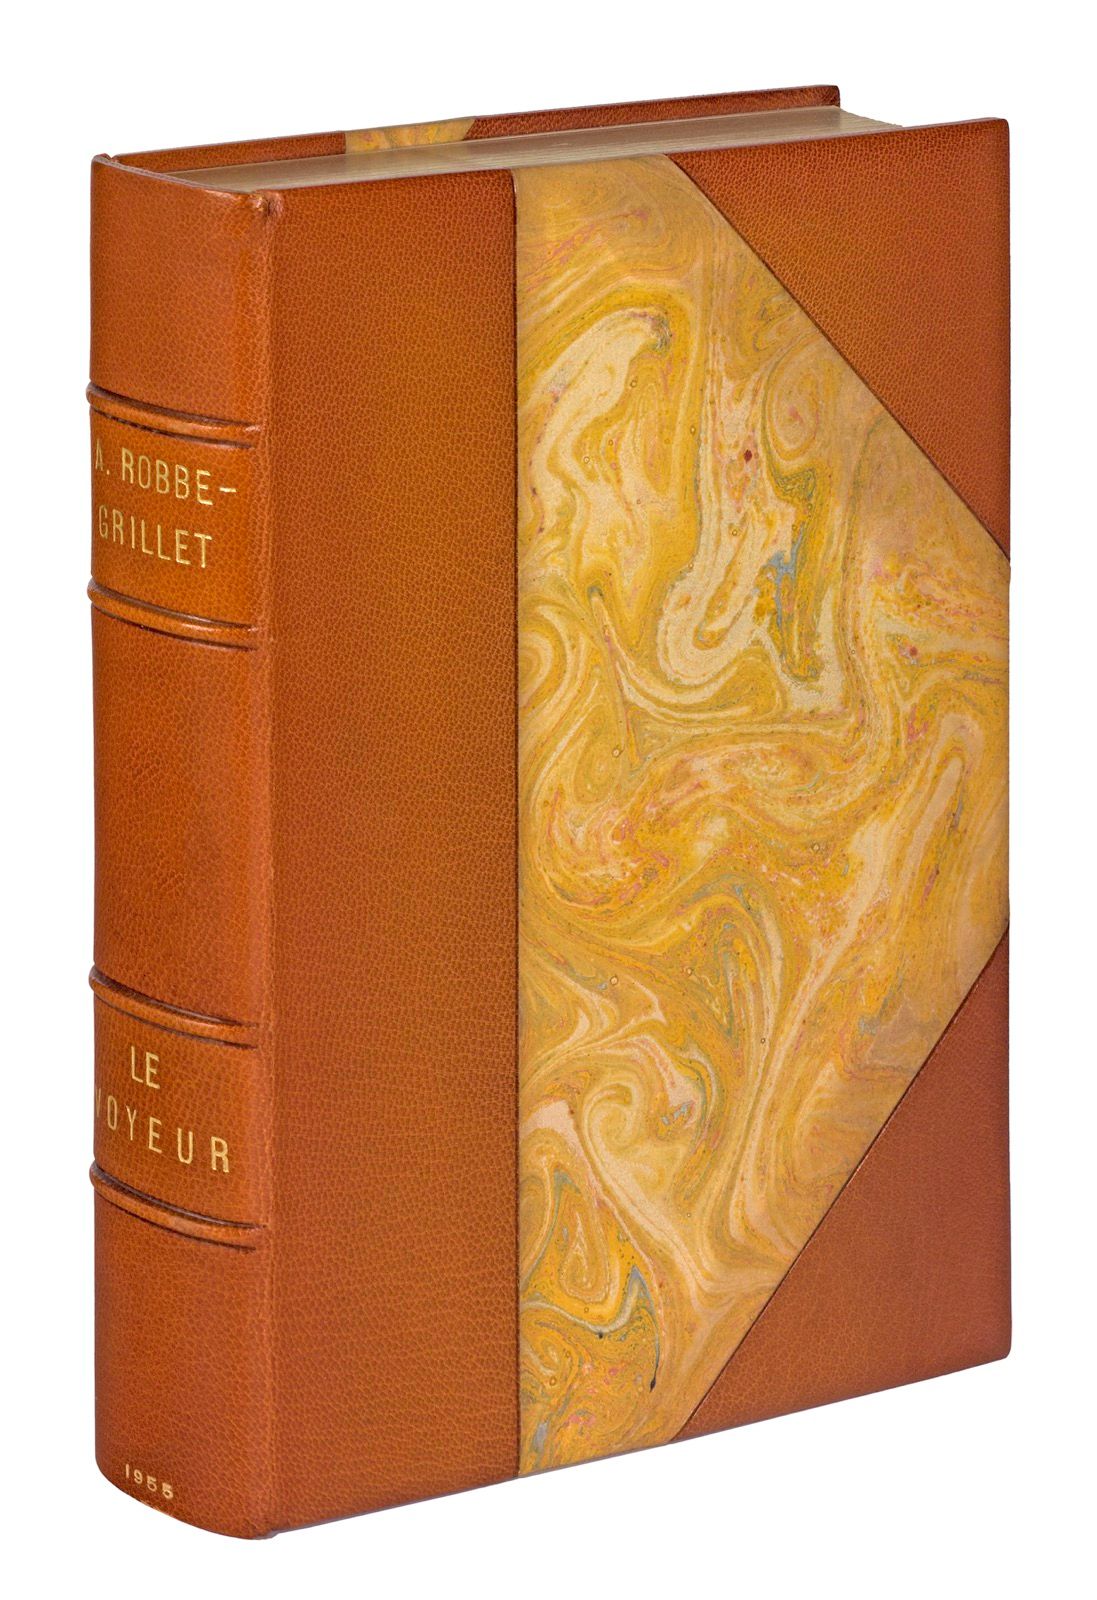 ROBBE-GRILLET (Alain). Le Voyeur. París, Éditions de Minuit, 1955. In-8 cuadrado&hellip;